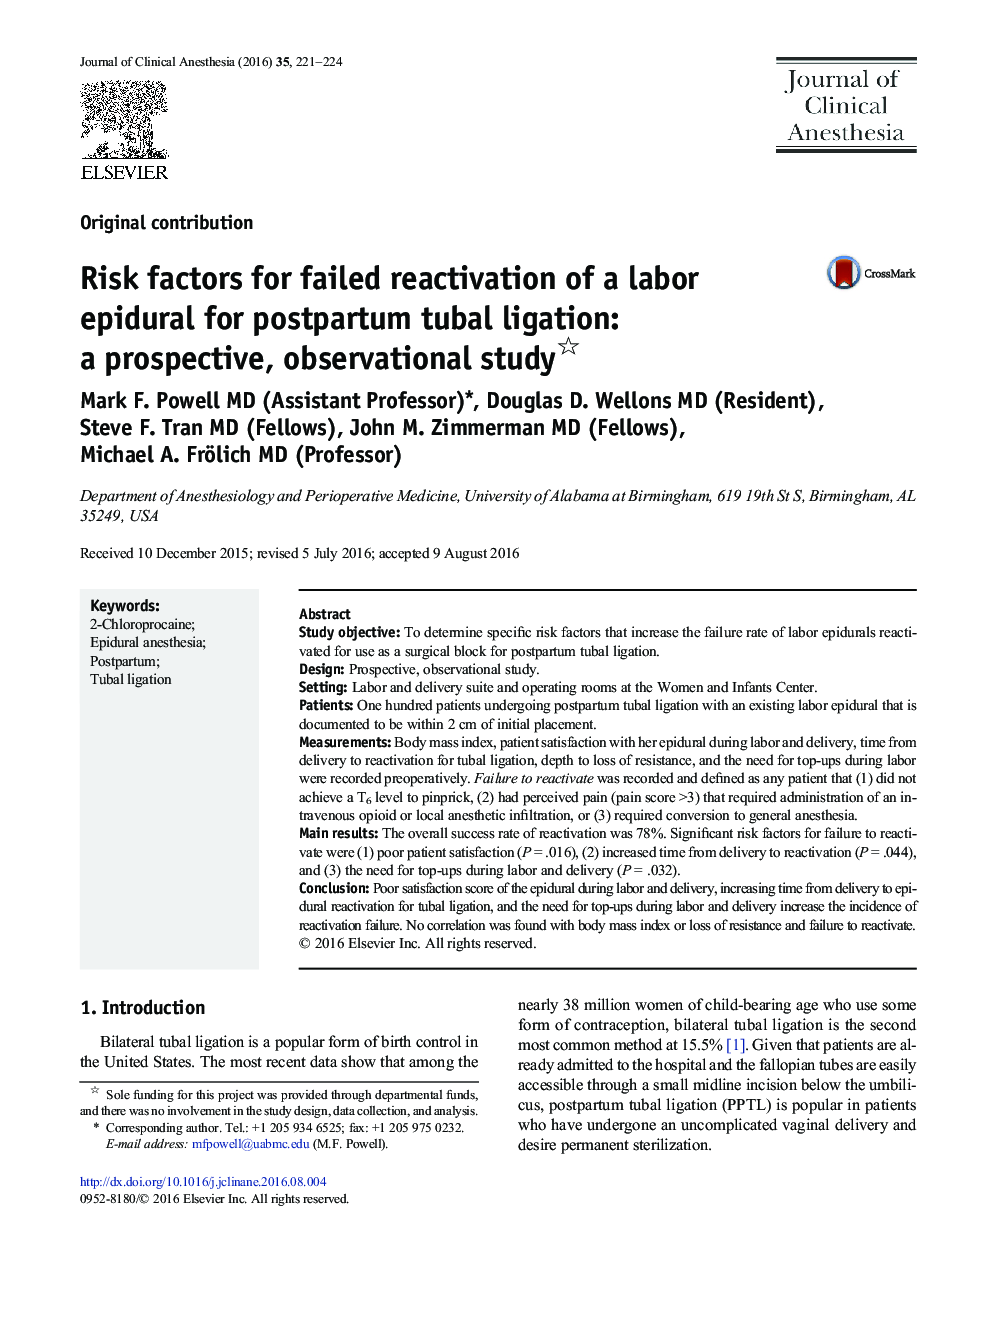 Risk factors for failed reactivation of a labor epidural for postpartum tubal ligation: a prospective, observational study